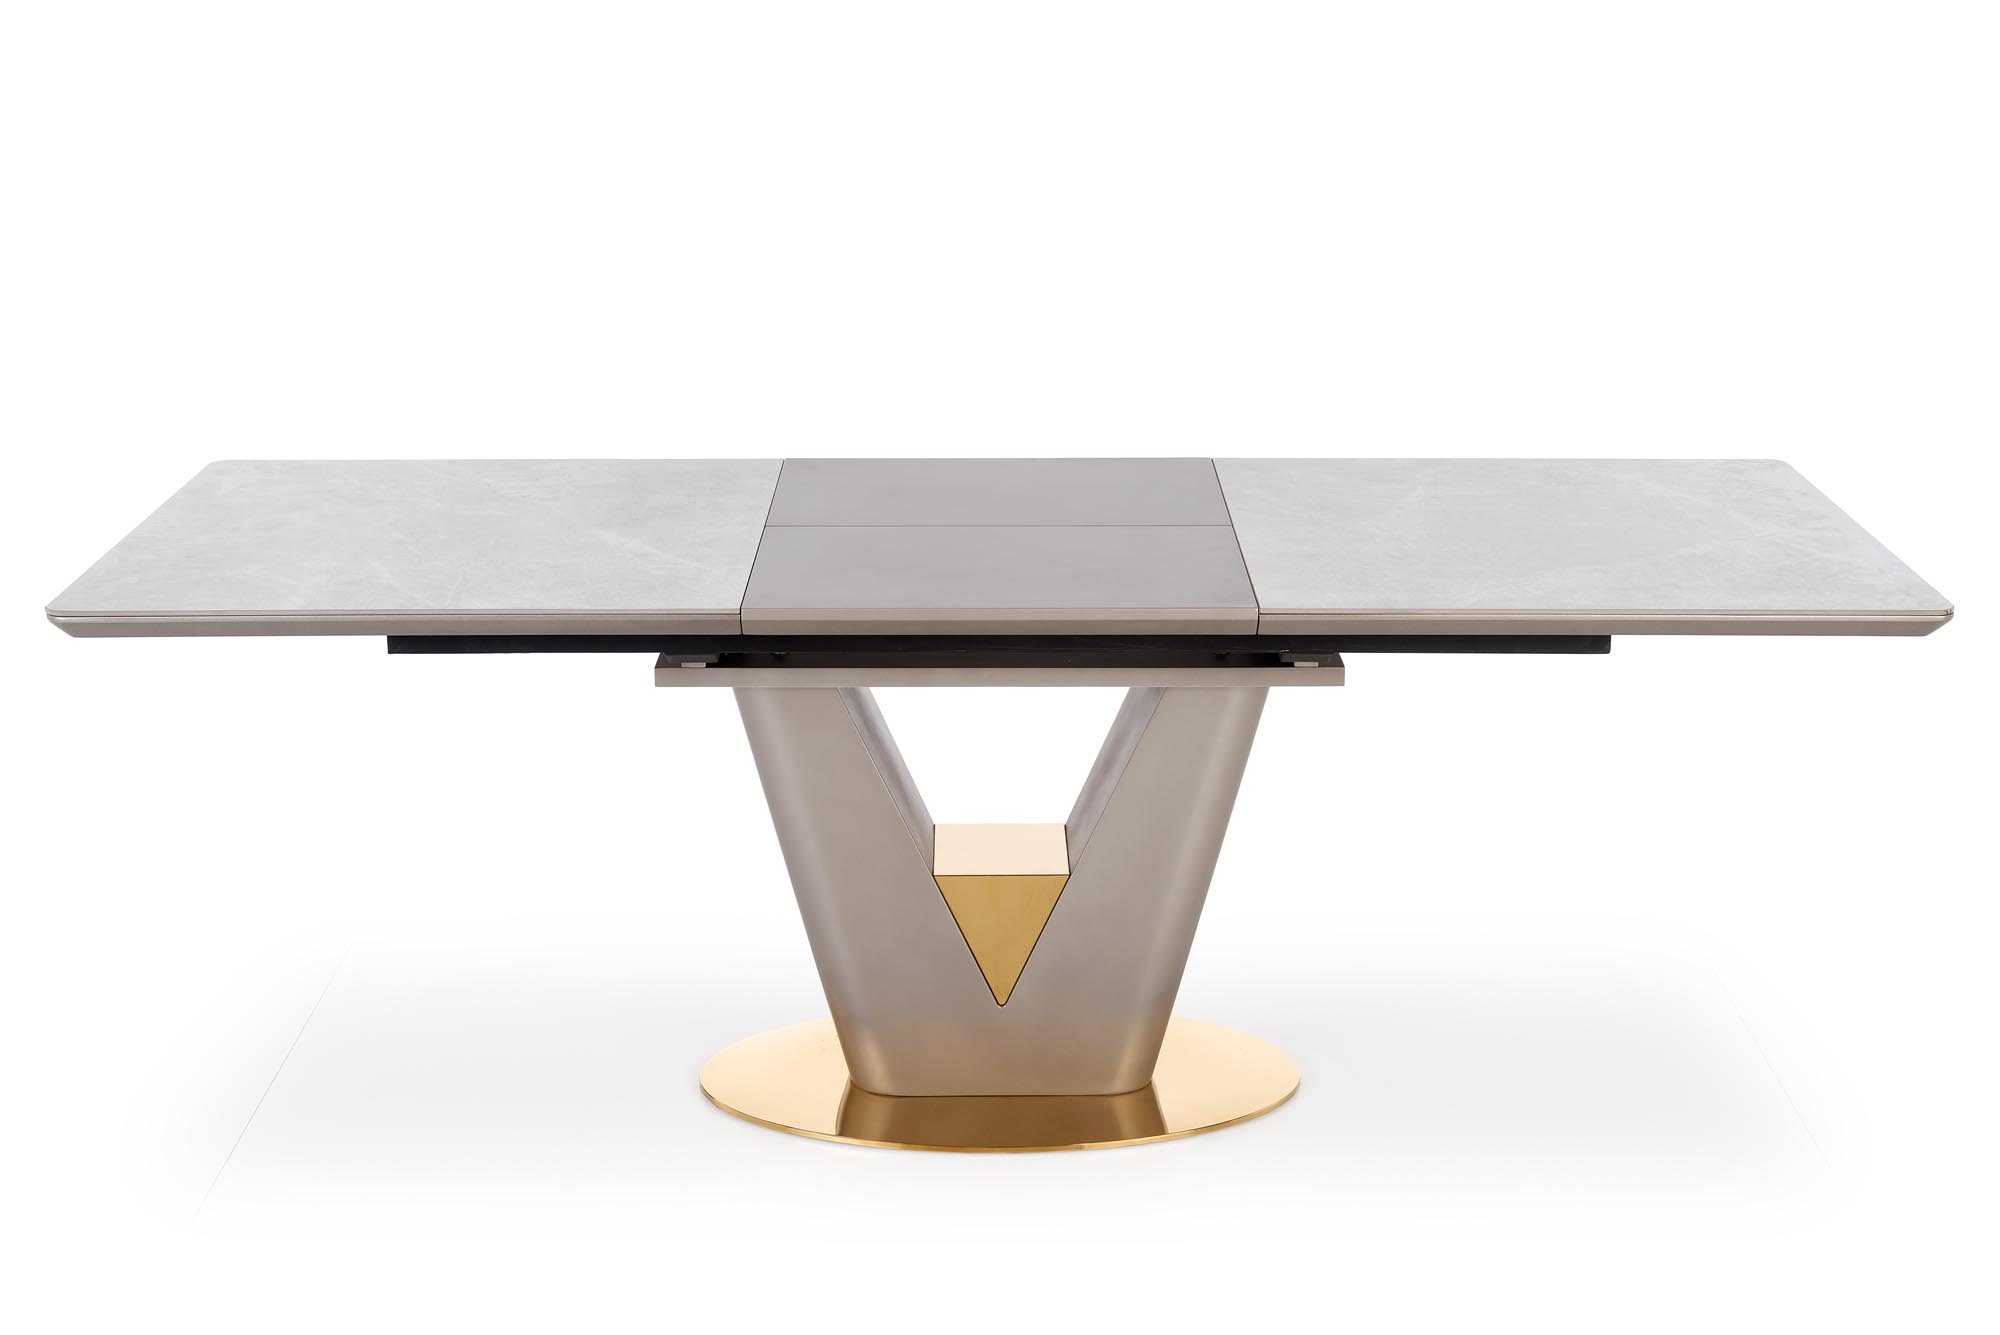 VALENTINO Stůl rozkládací jasný popel/Žlutý valentino stůl rozkládací jasný popel/Žlutý